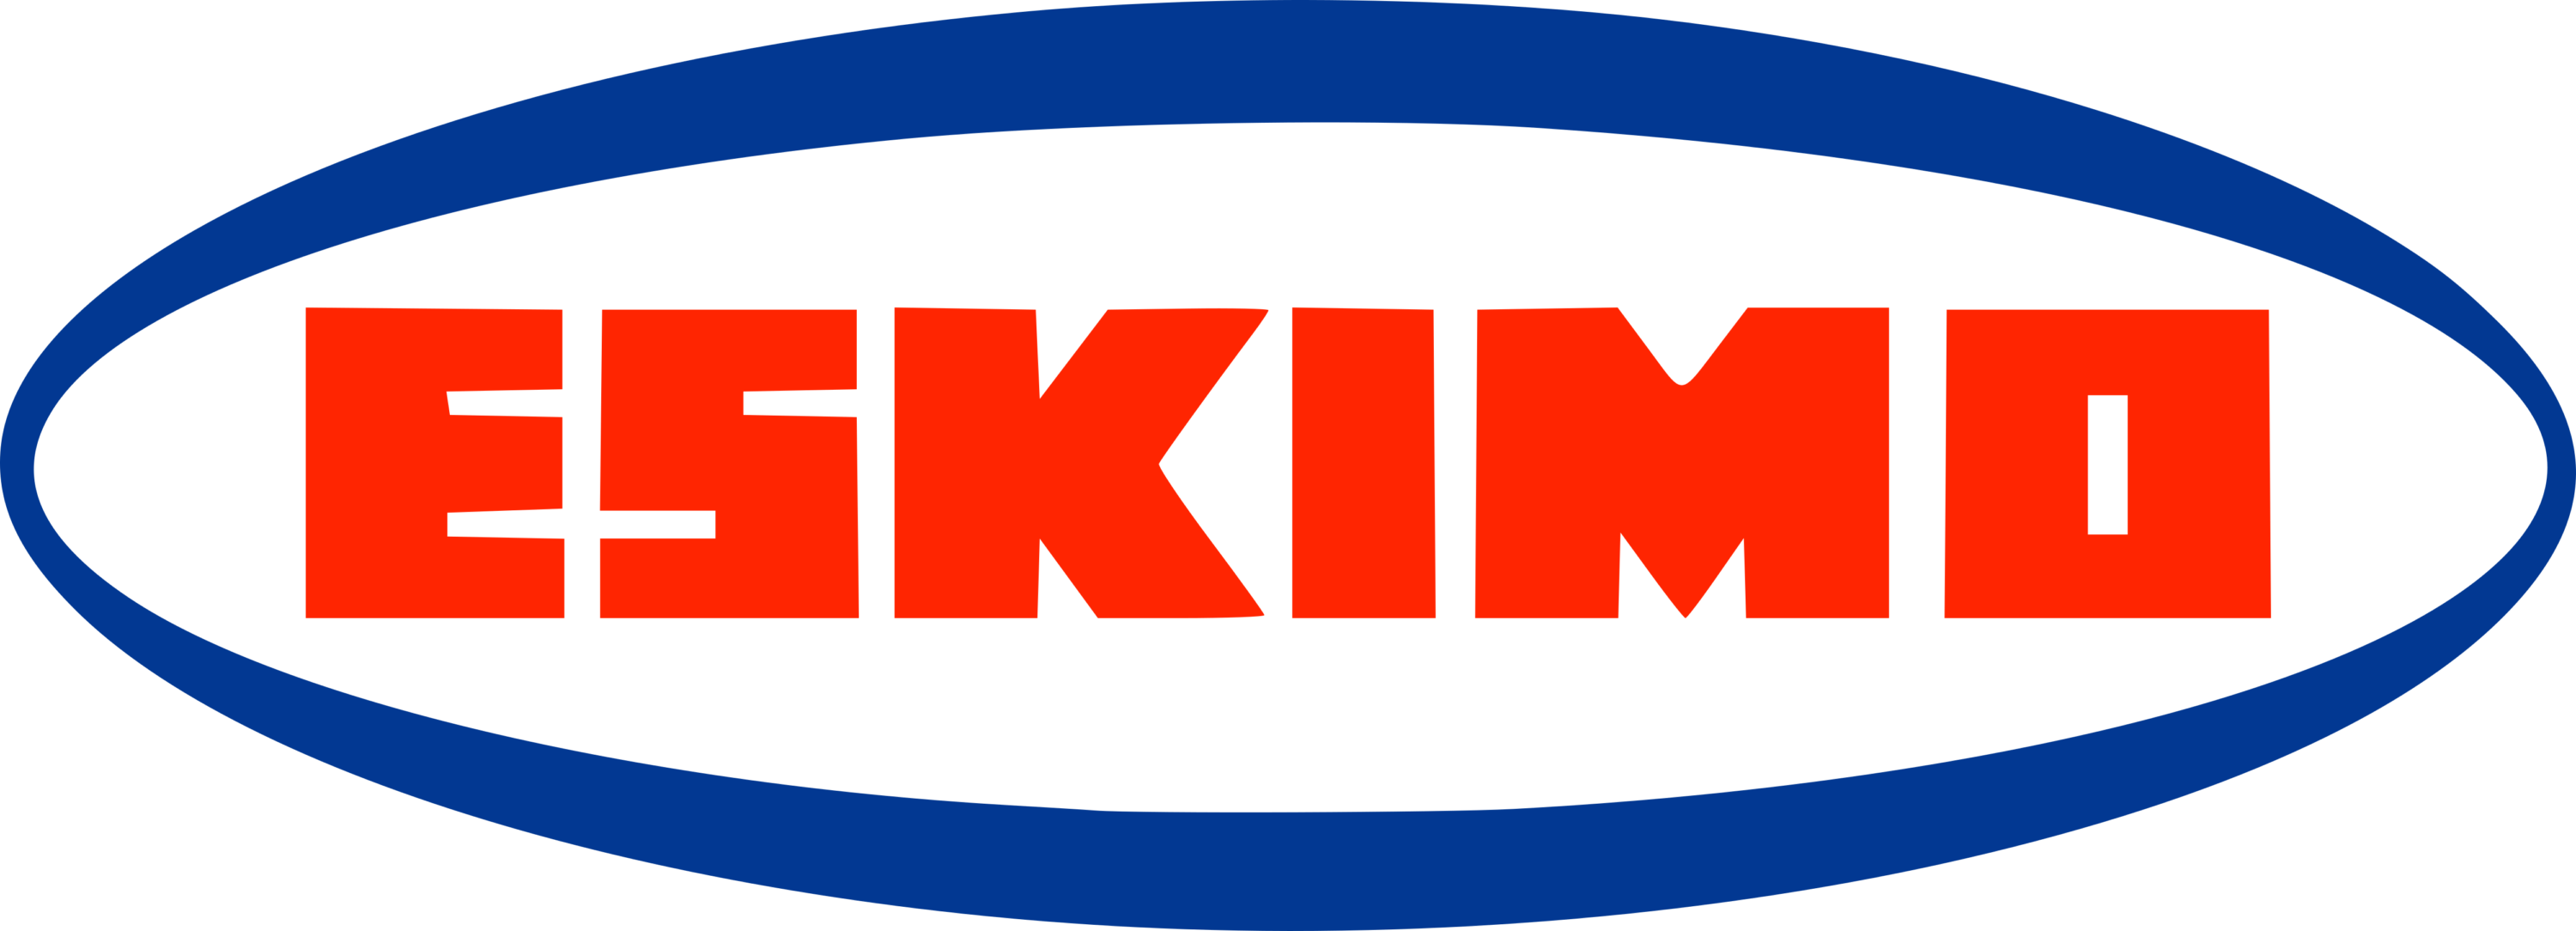 Eskimo (ice cream) Logo